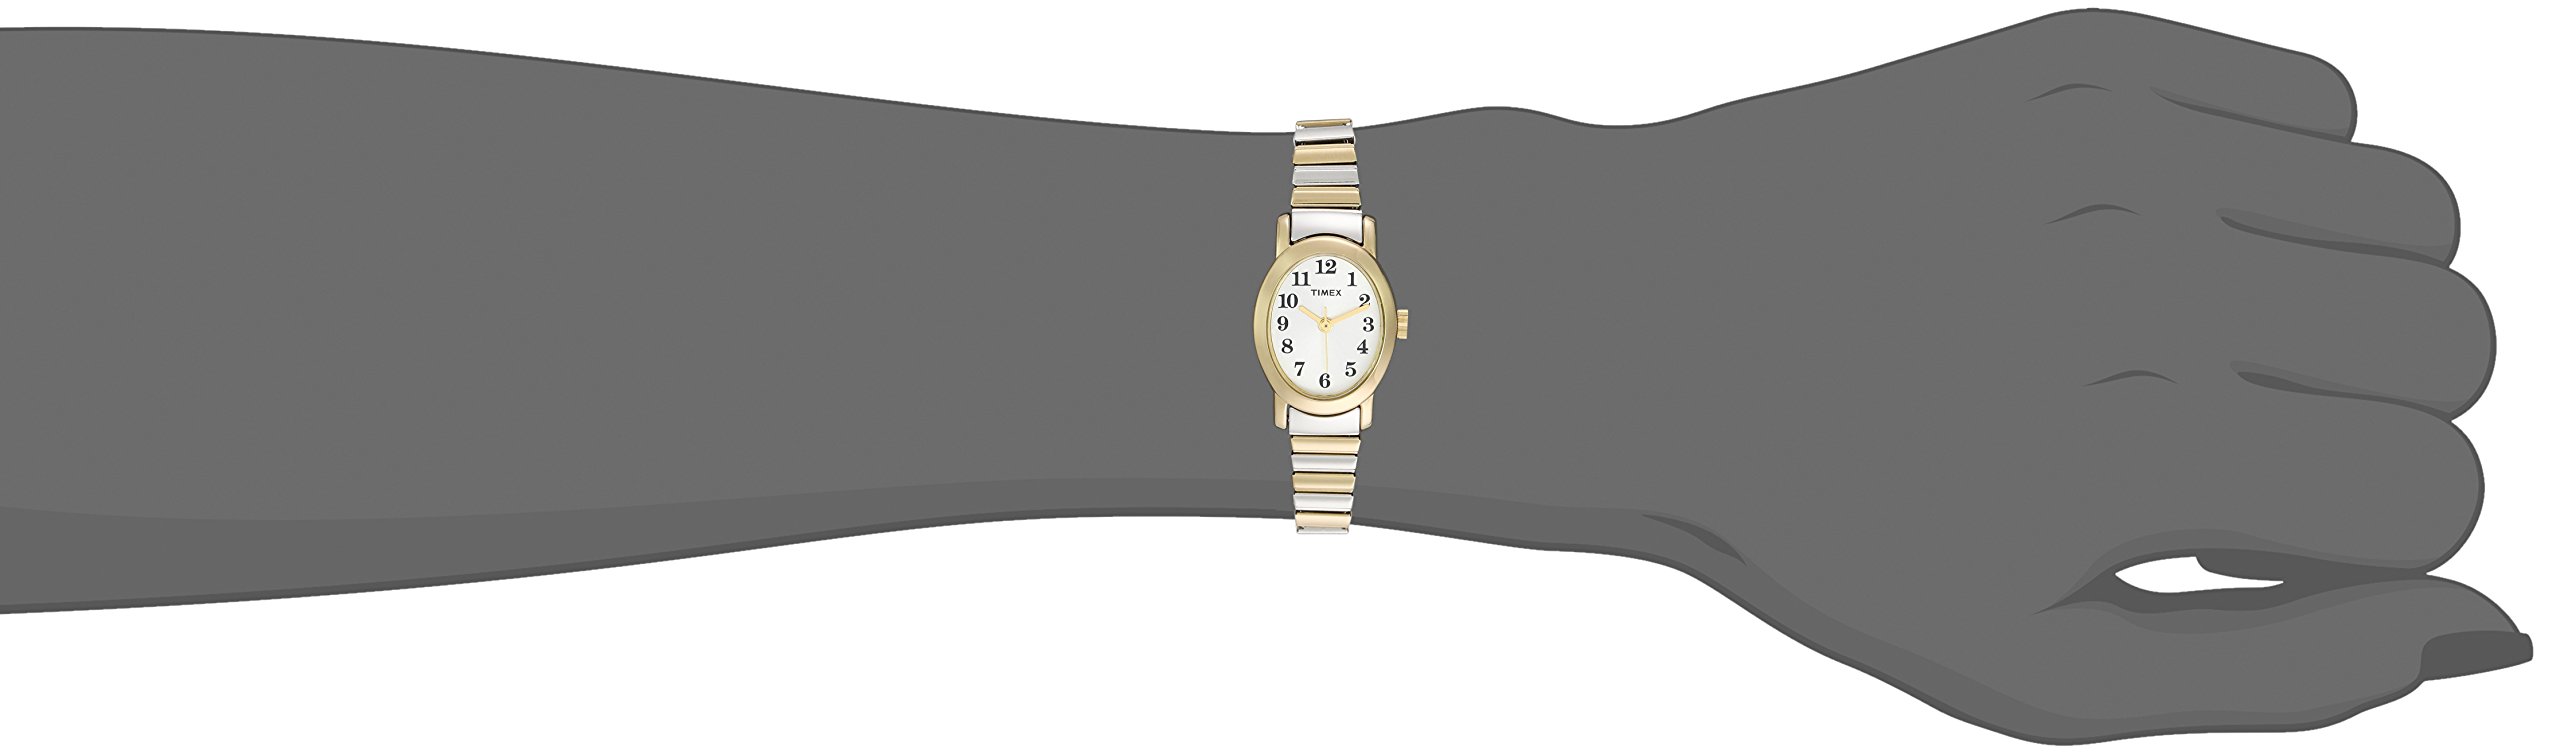 Timex Cavatina Expansion Band Watch